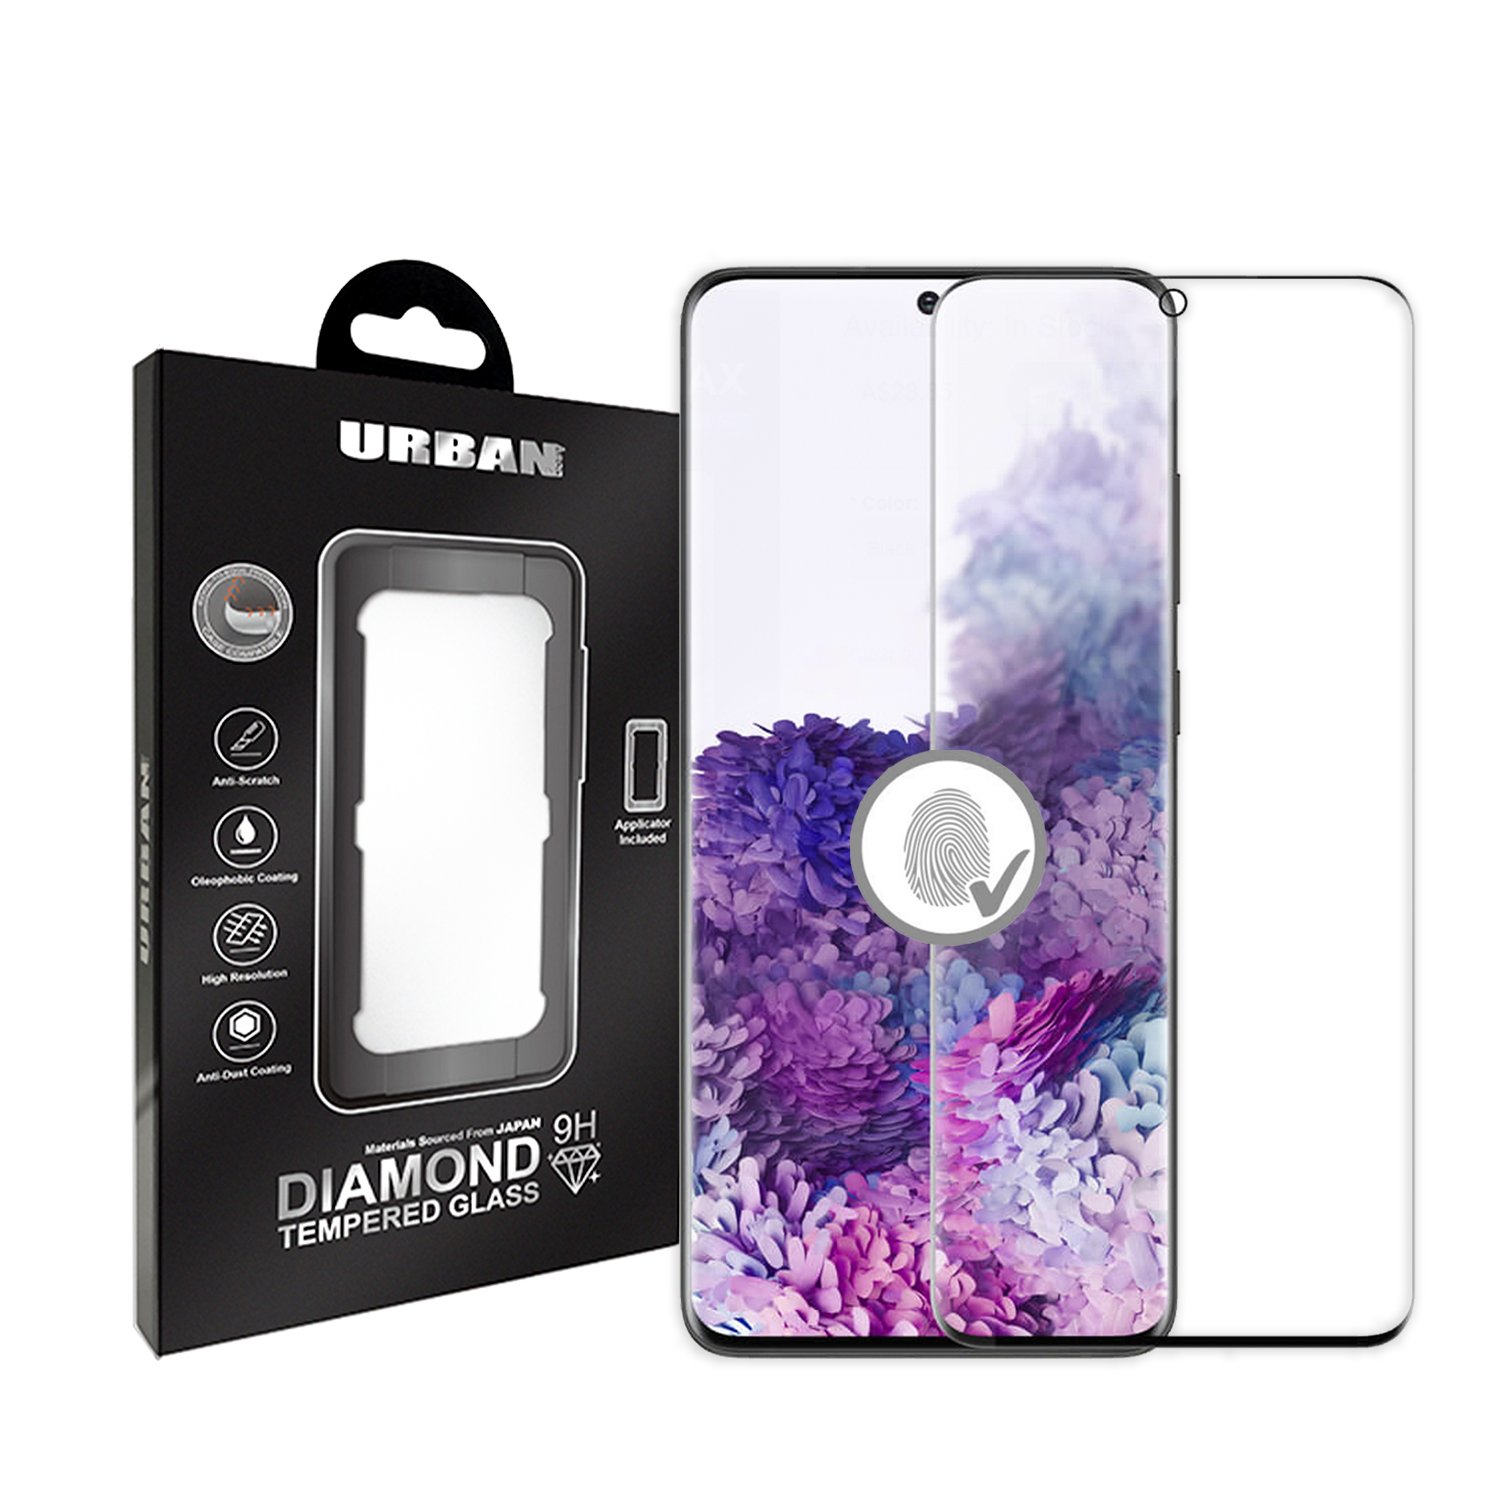 Urban Diamond Glass A54 5G